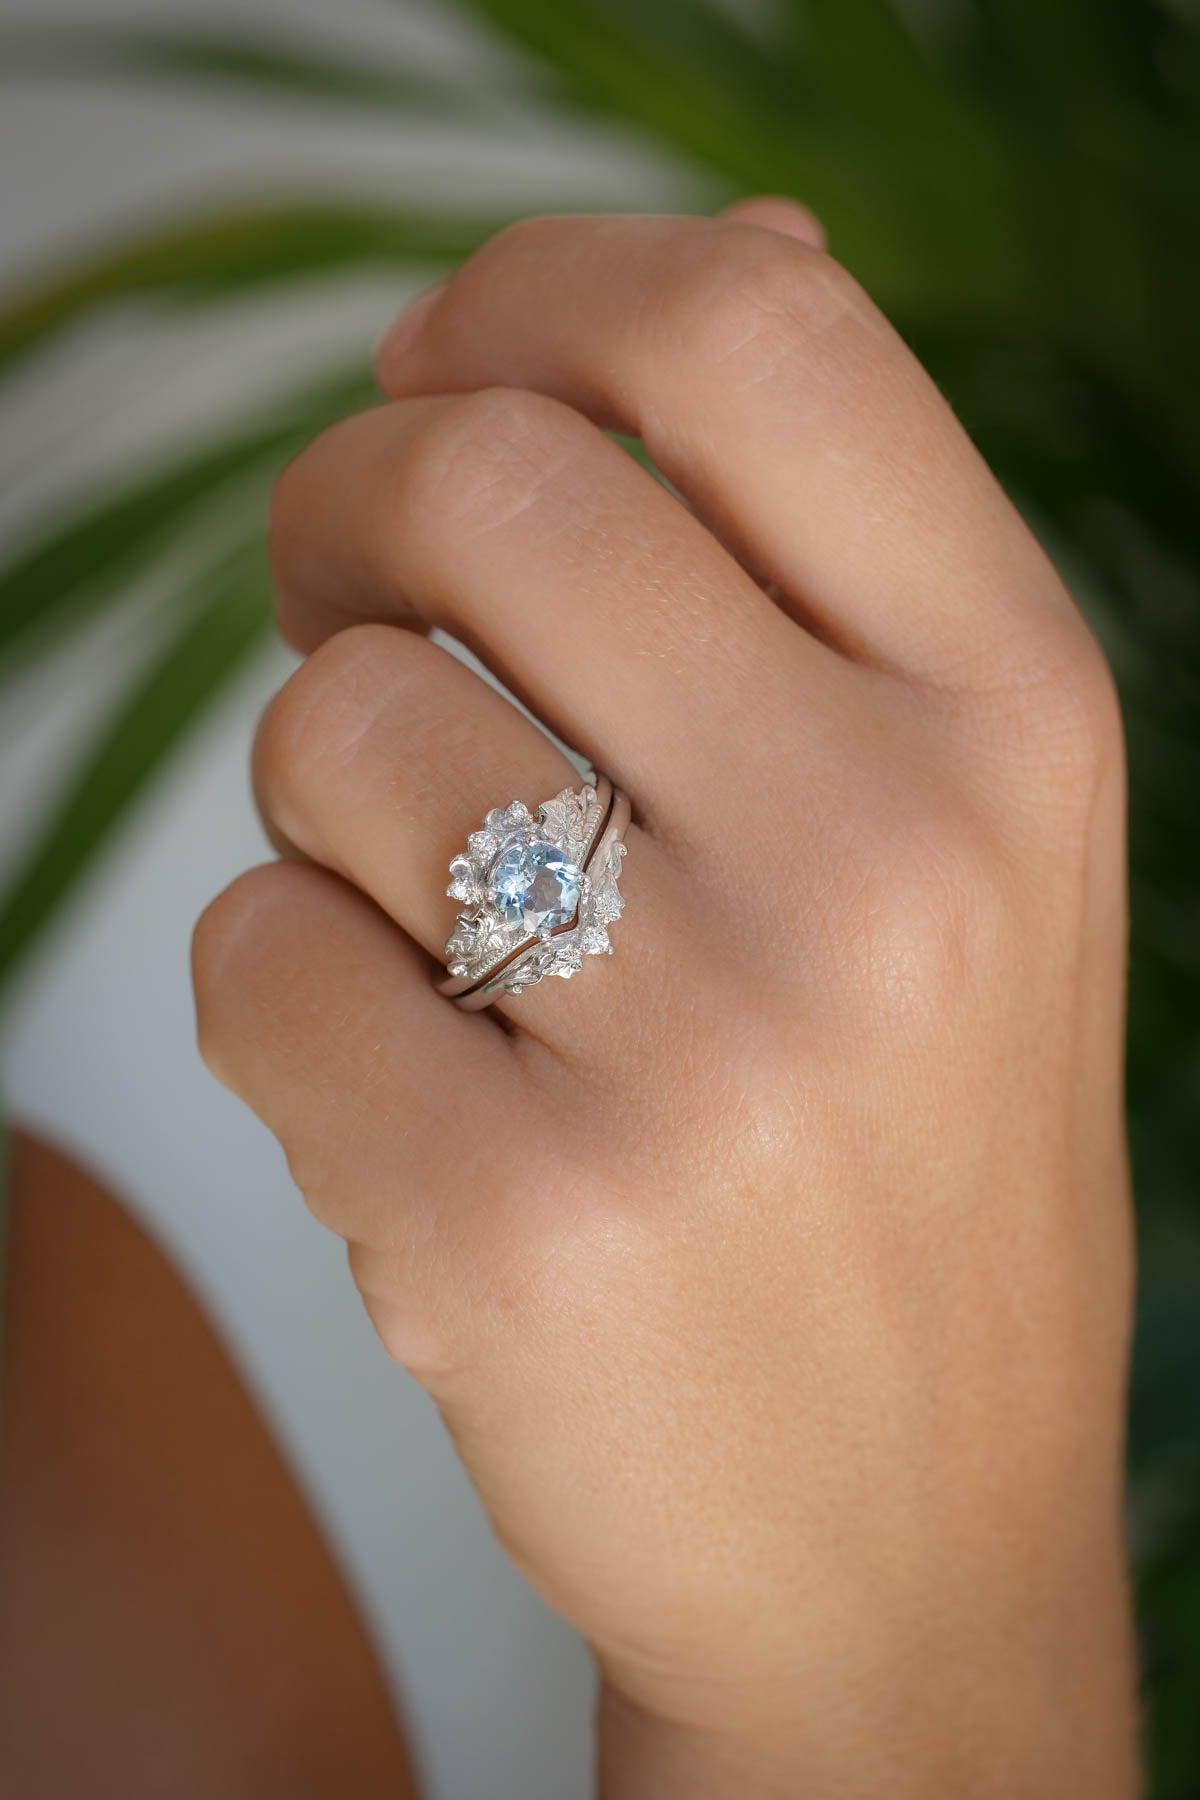 Elongated 3ct Pear Cut Natural Aquamarine Engagement Ring Art Deco Diamonds  Wedding 14K Gold